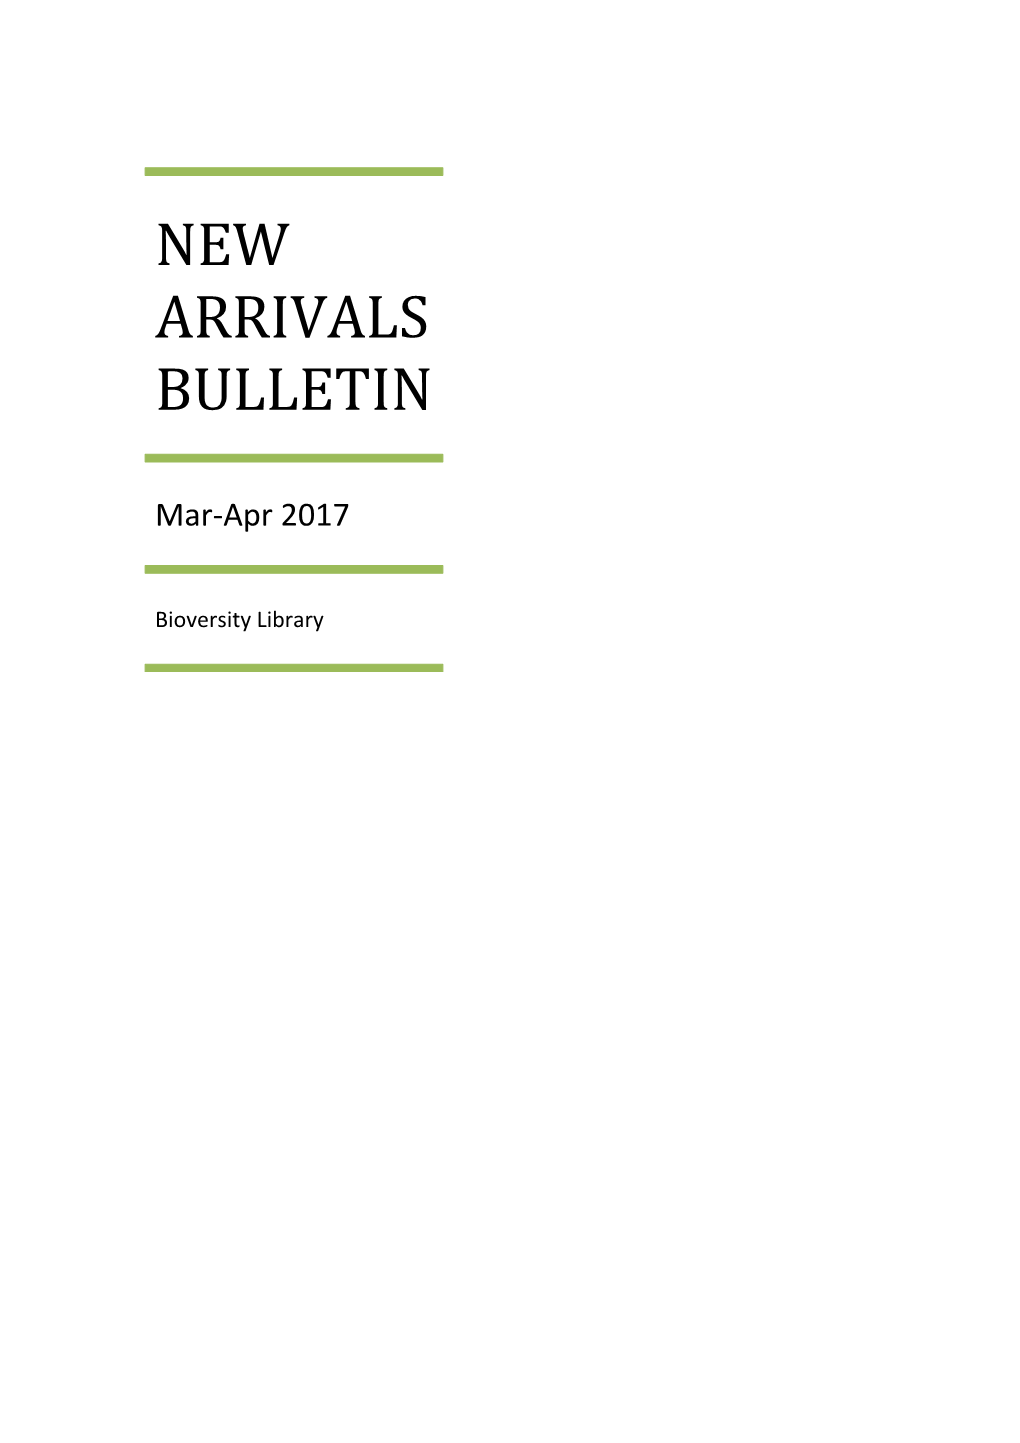 New Arrivals Bulletin